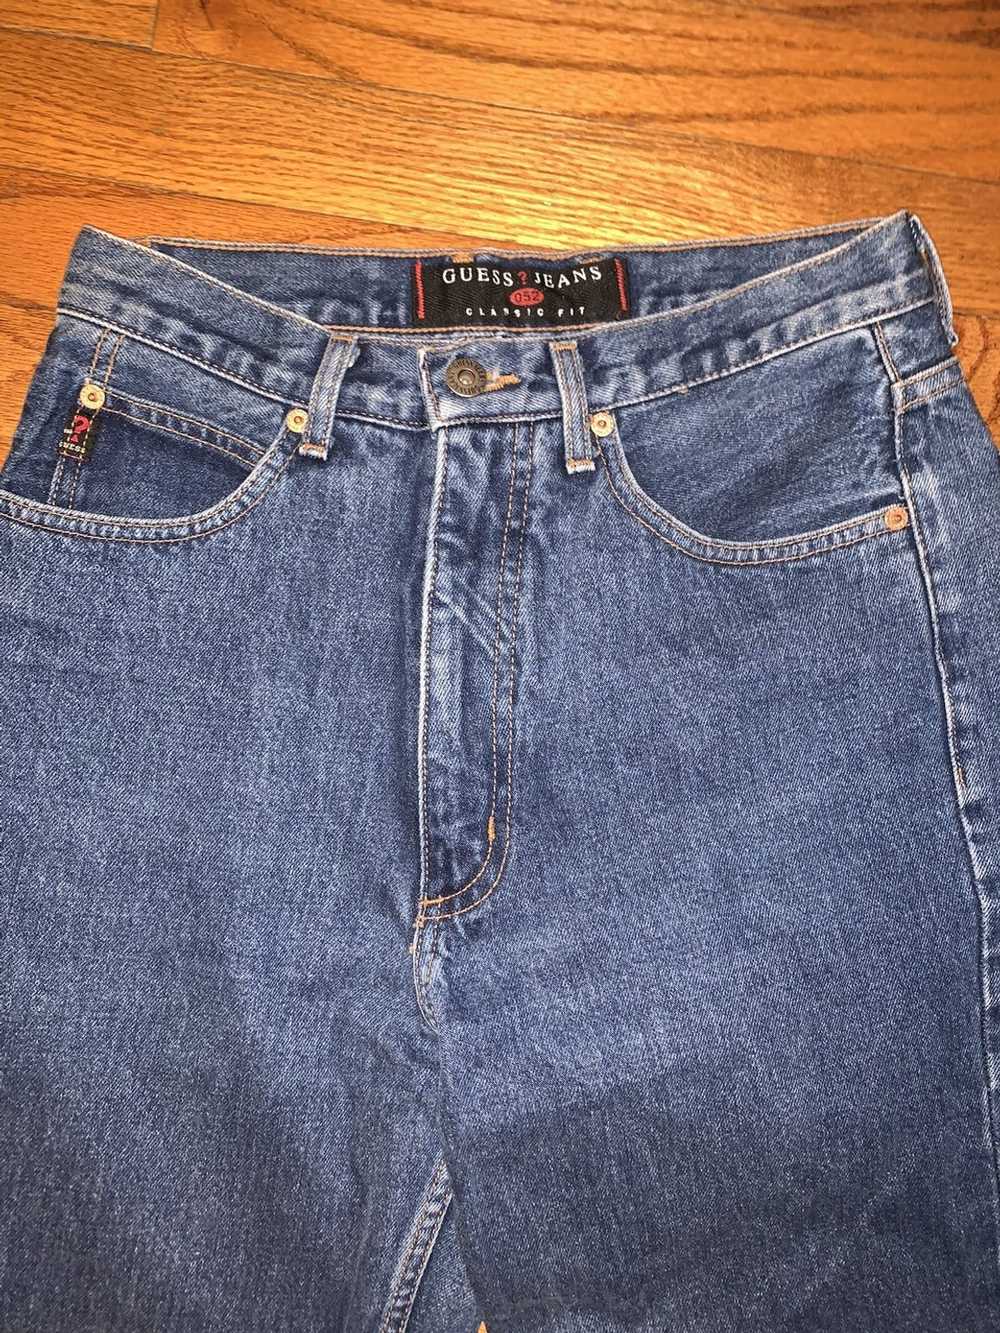 Guess × Streetwear × Vintage Vintage Guess jeans - image 5